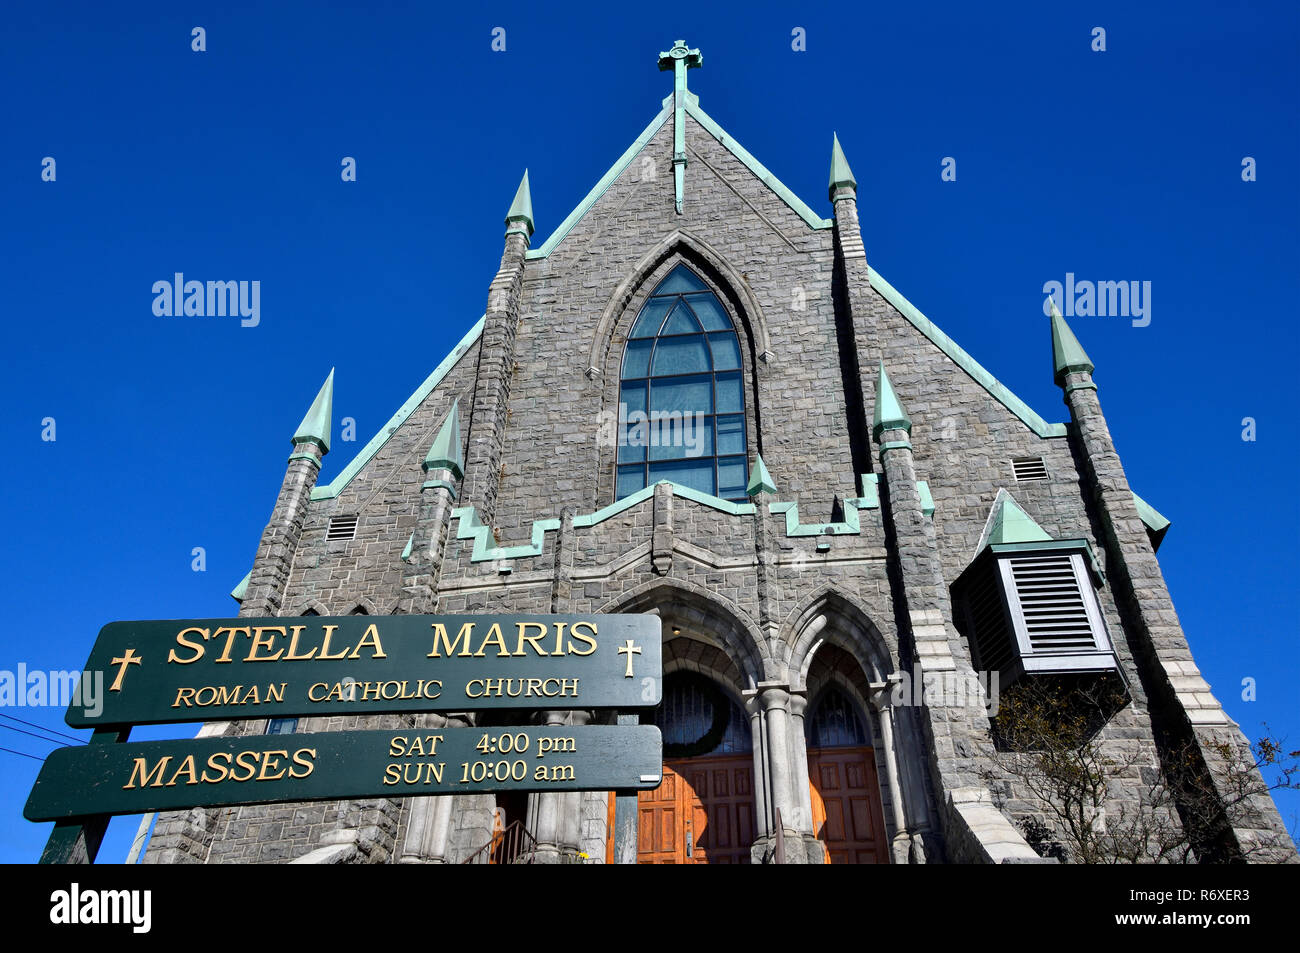 A front view of the Roman Catholic Stella Maris stone church on Bayside Drive in Saint John New Brunswick Canada. Stock Photo